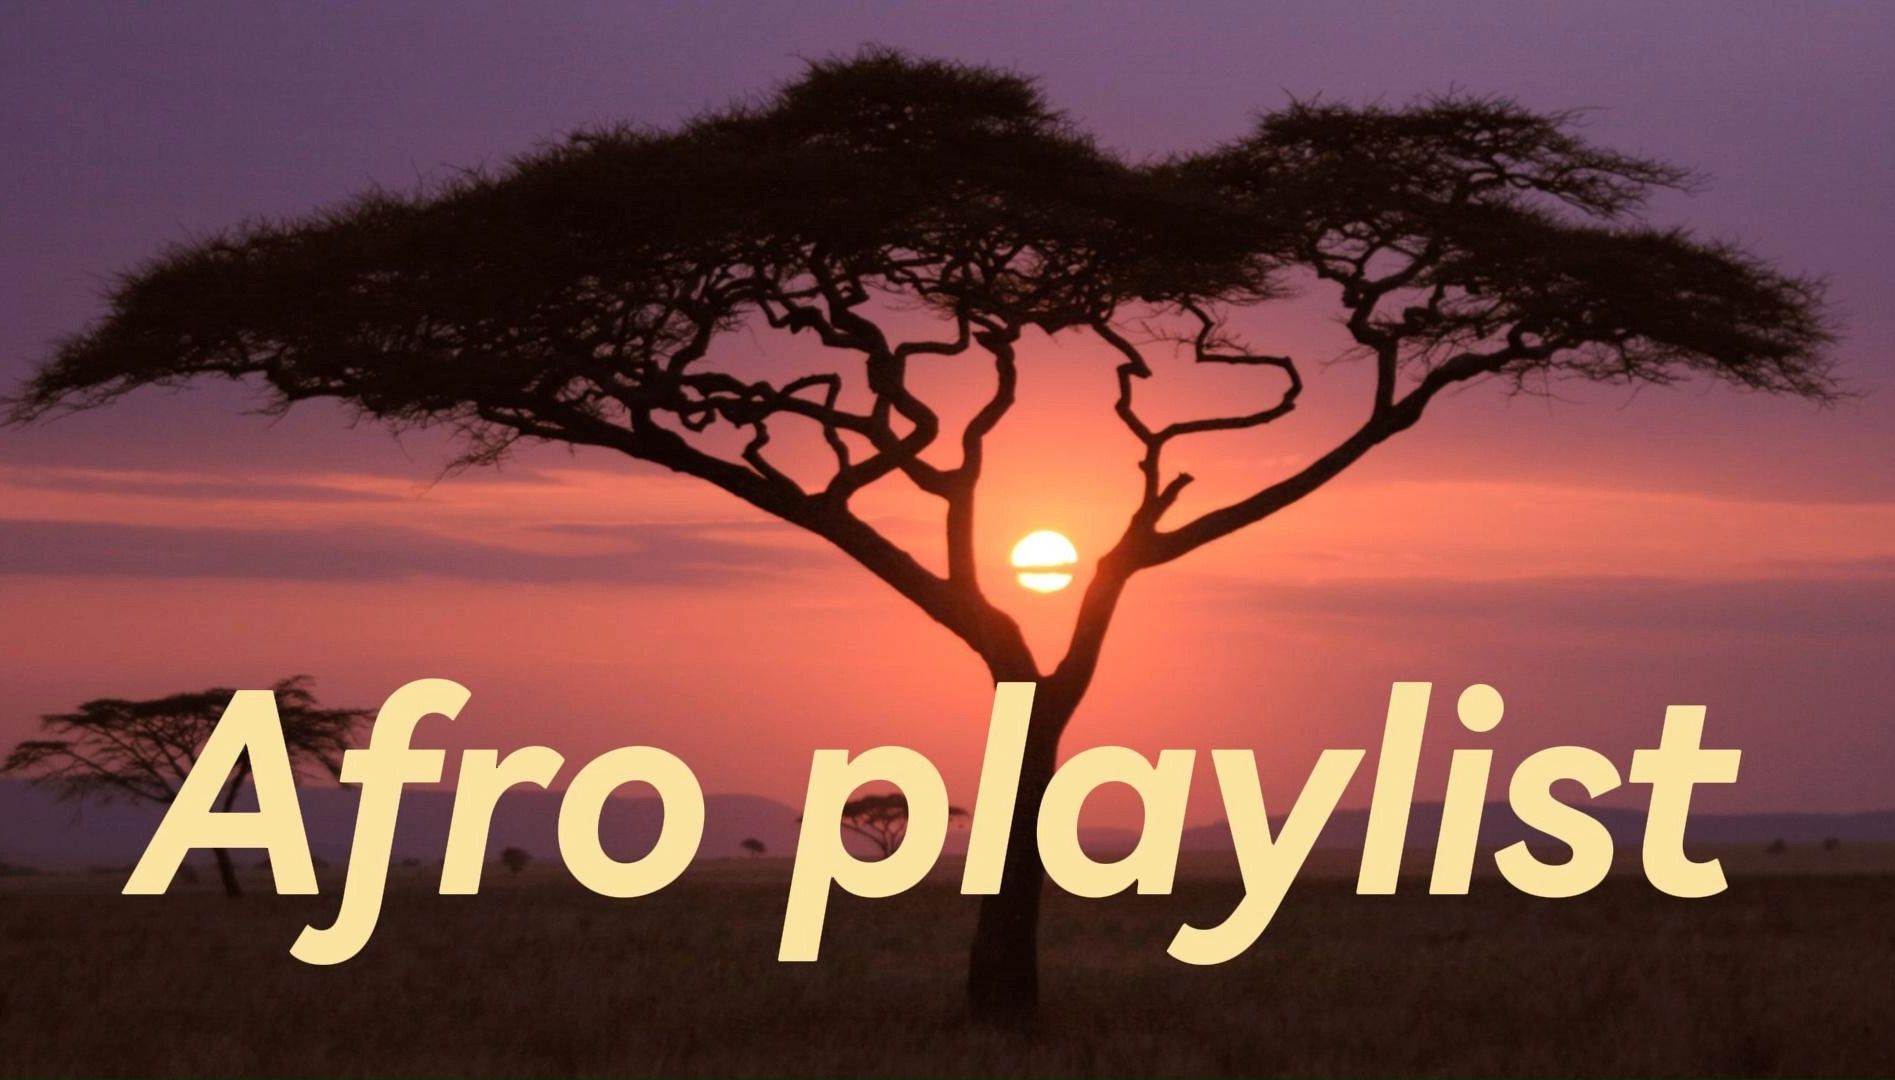 【playlist】Afro风格歌单 ♫ 第2弹 | 自由蔓延的生命力 | 放松 工作 通勤